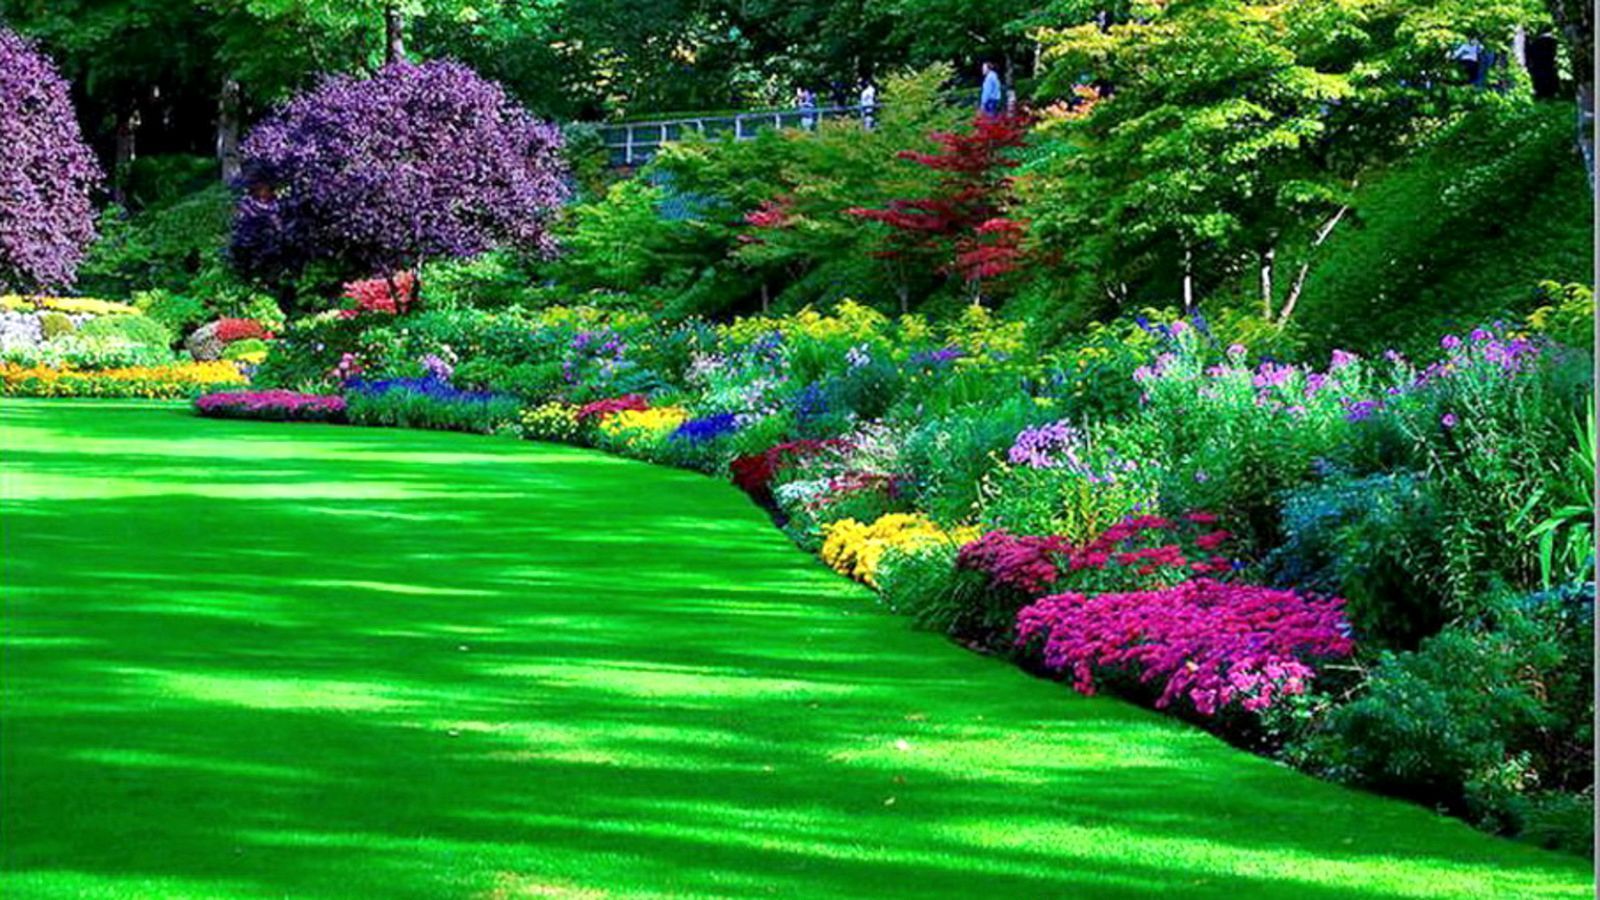 Garden Image HD Free Download Garden Park HD Pretty. Flower garden image, Garden image, Beautiful gardens